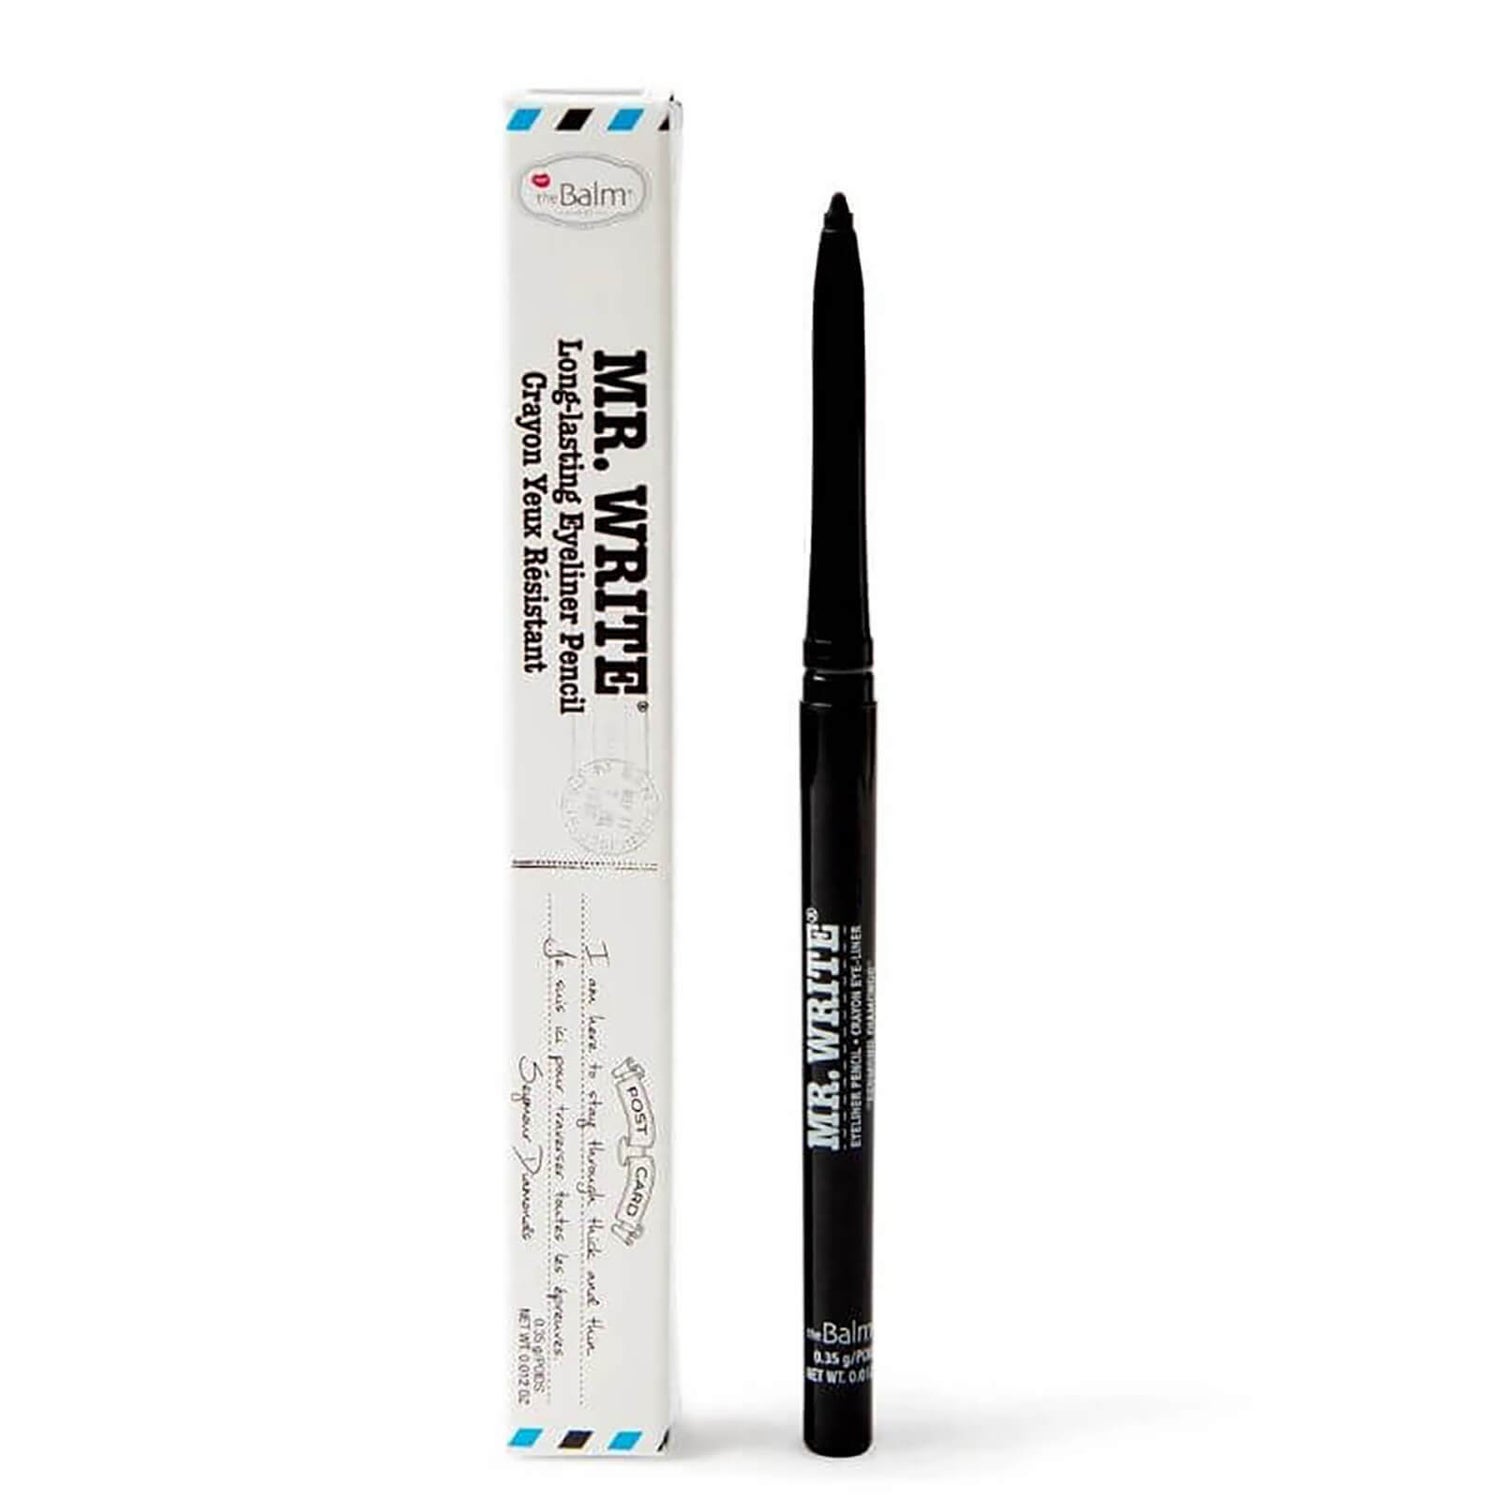 theBalm Mr. Write Eyeliner Pencil 0.35g - Seymour Datenights (Various Shades)